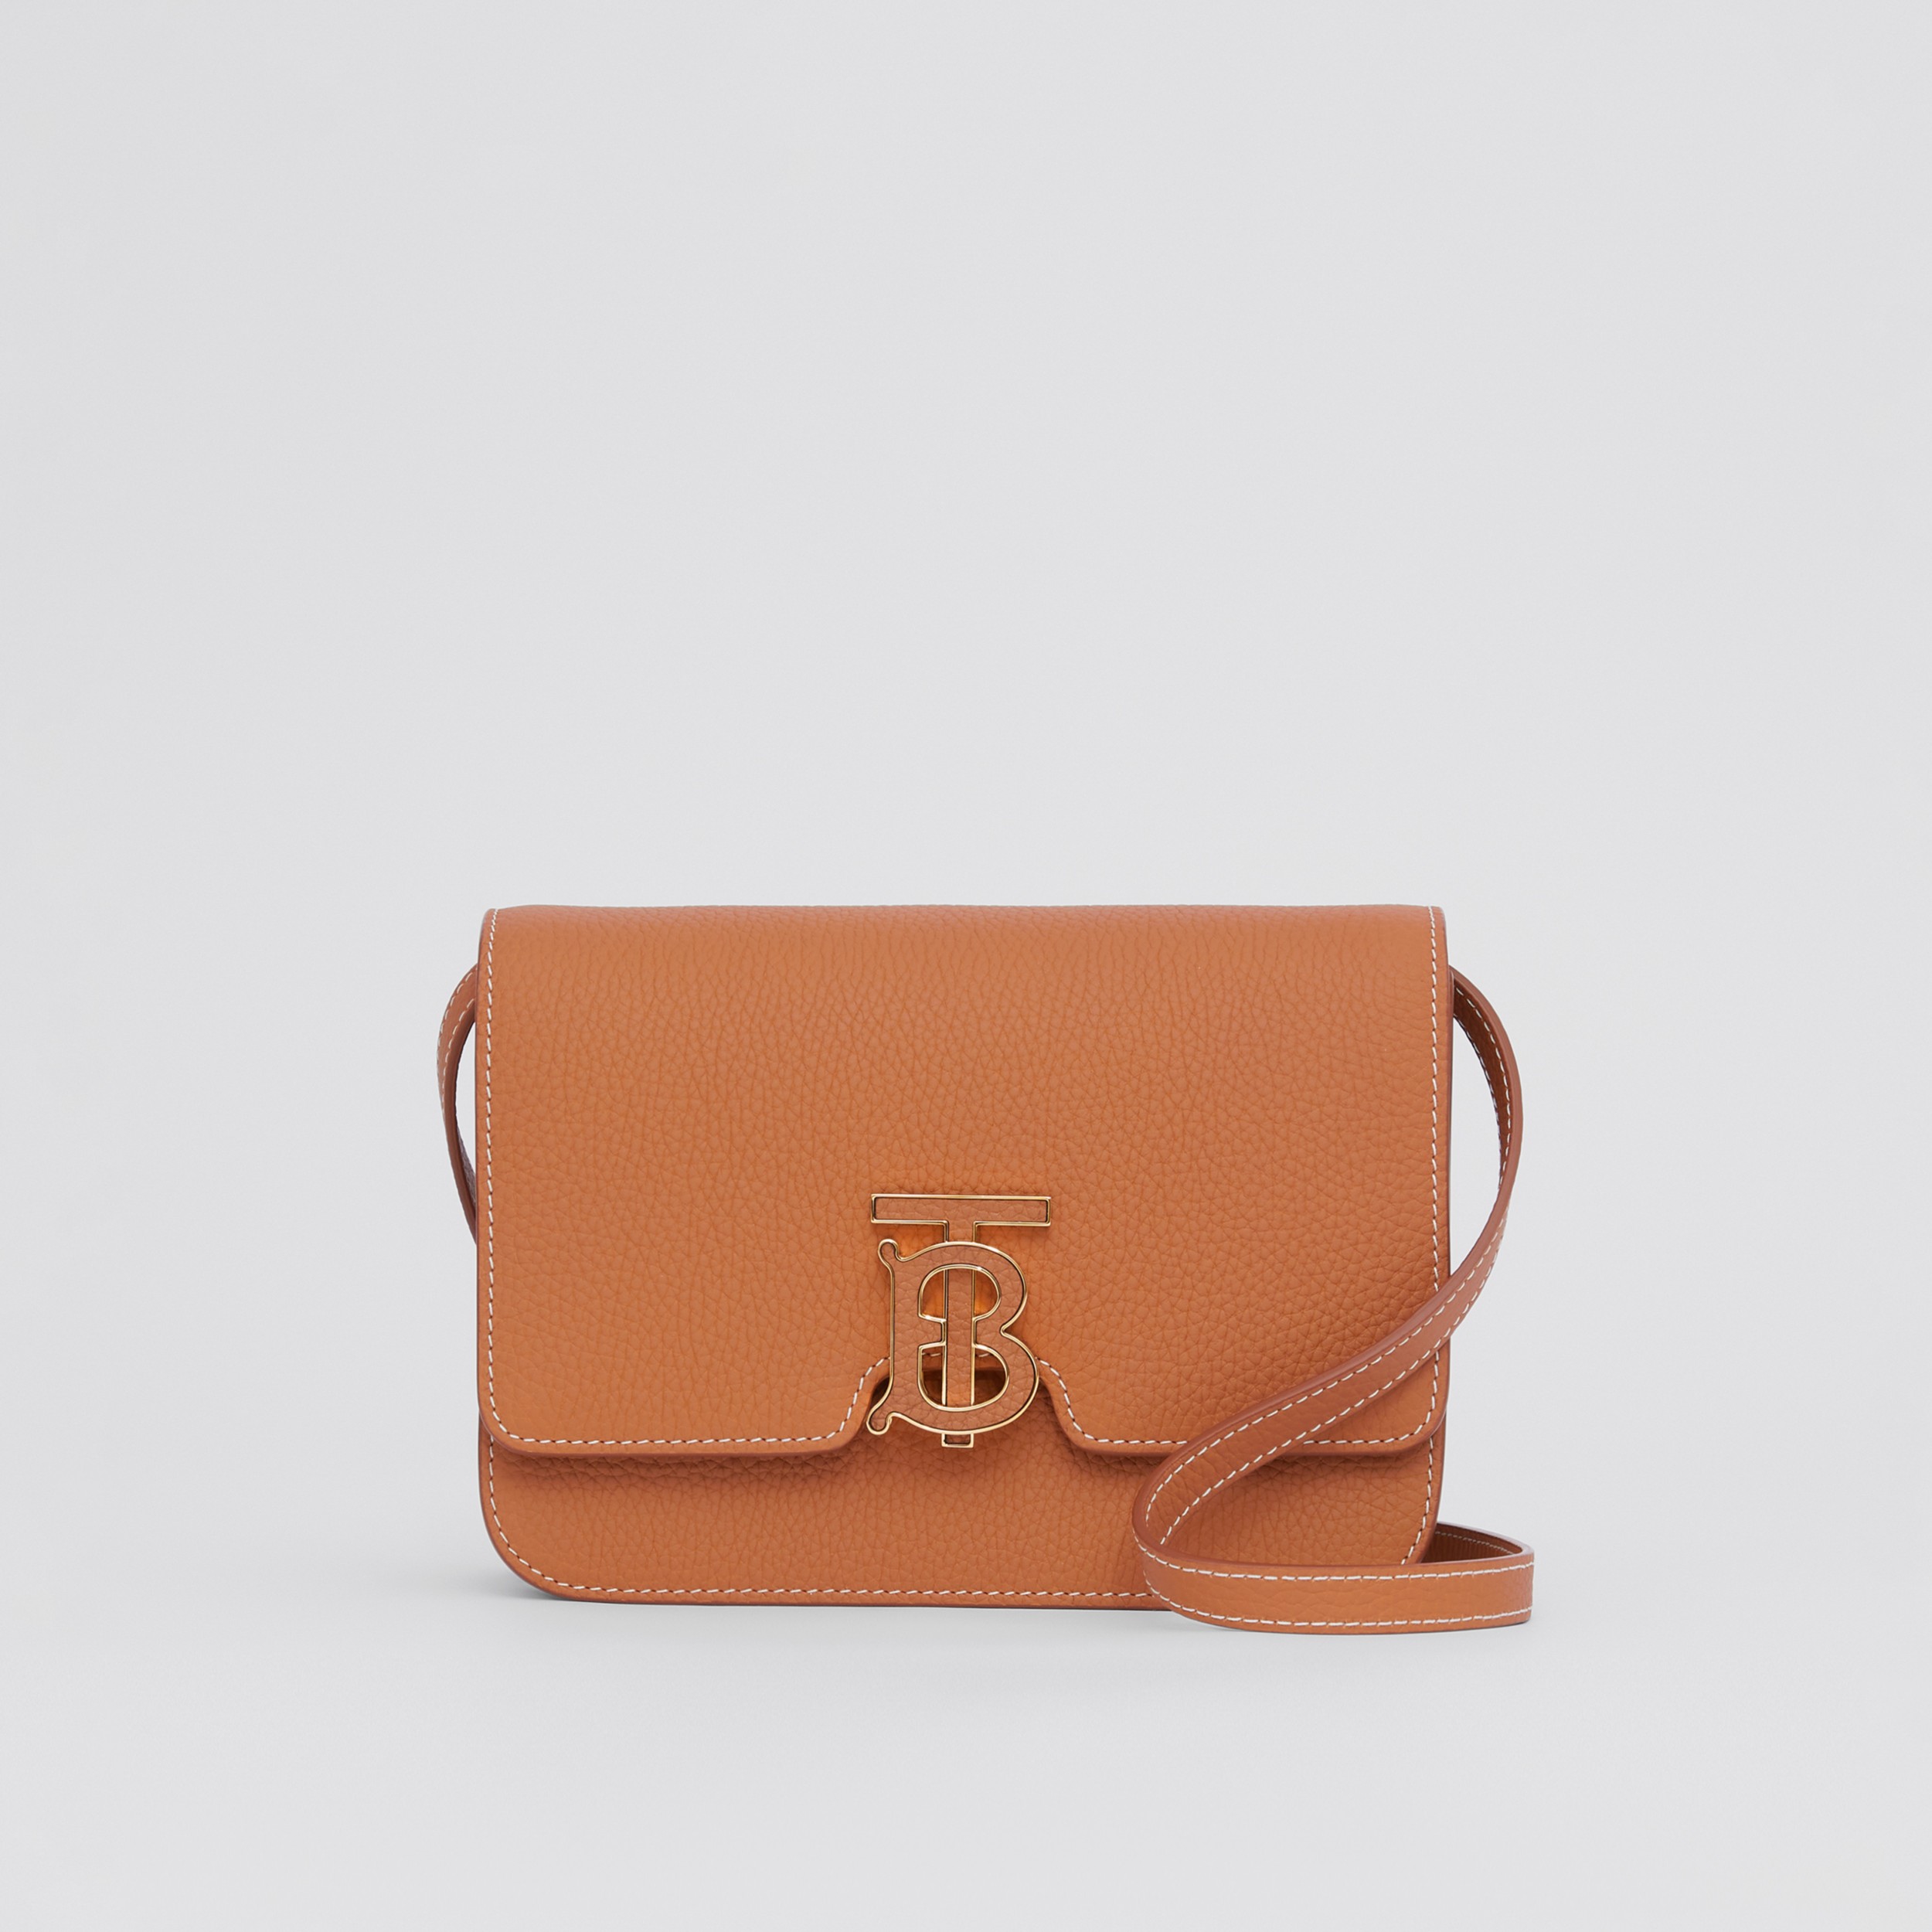 Introducir 81+ imagen burberry brown leather bag